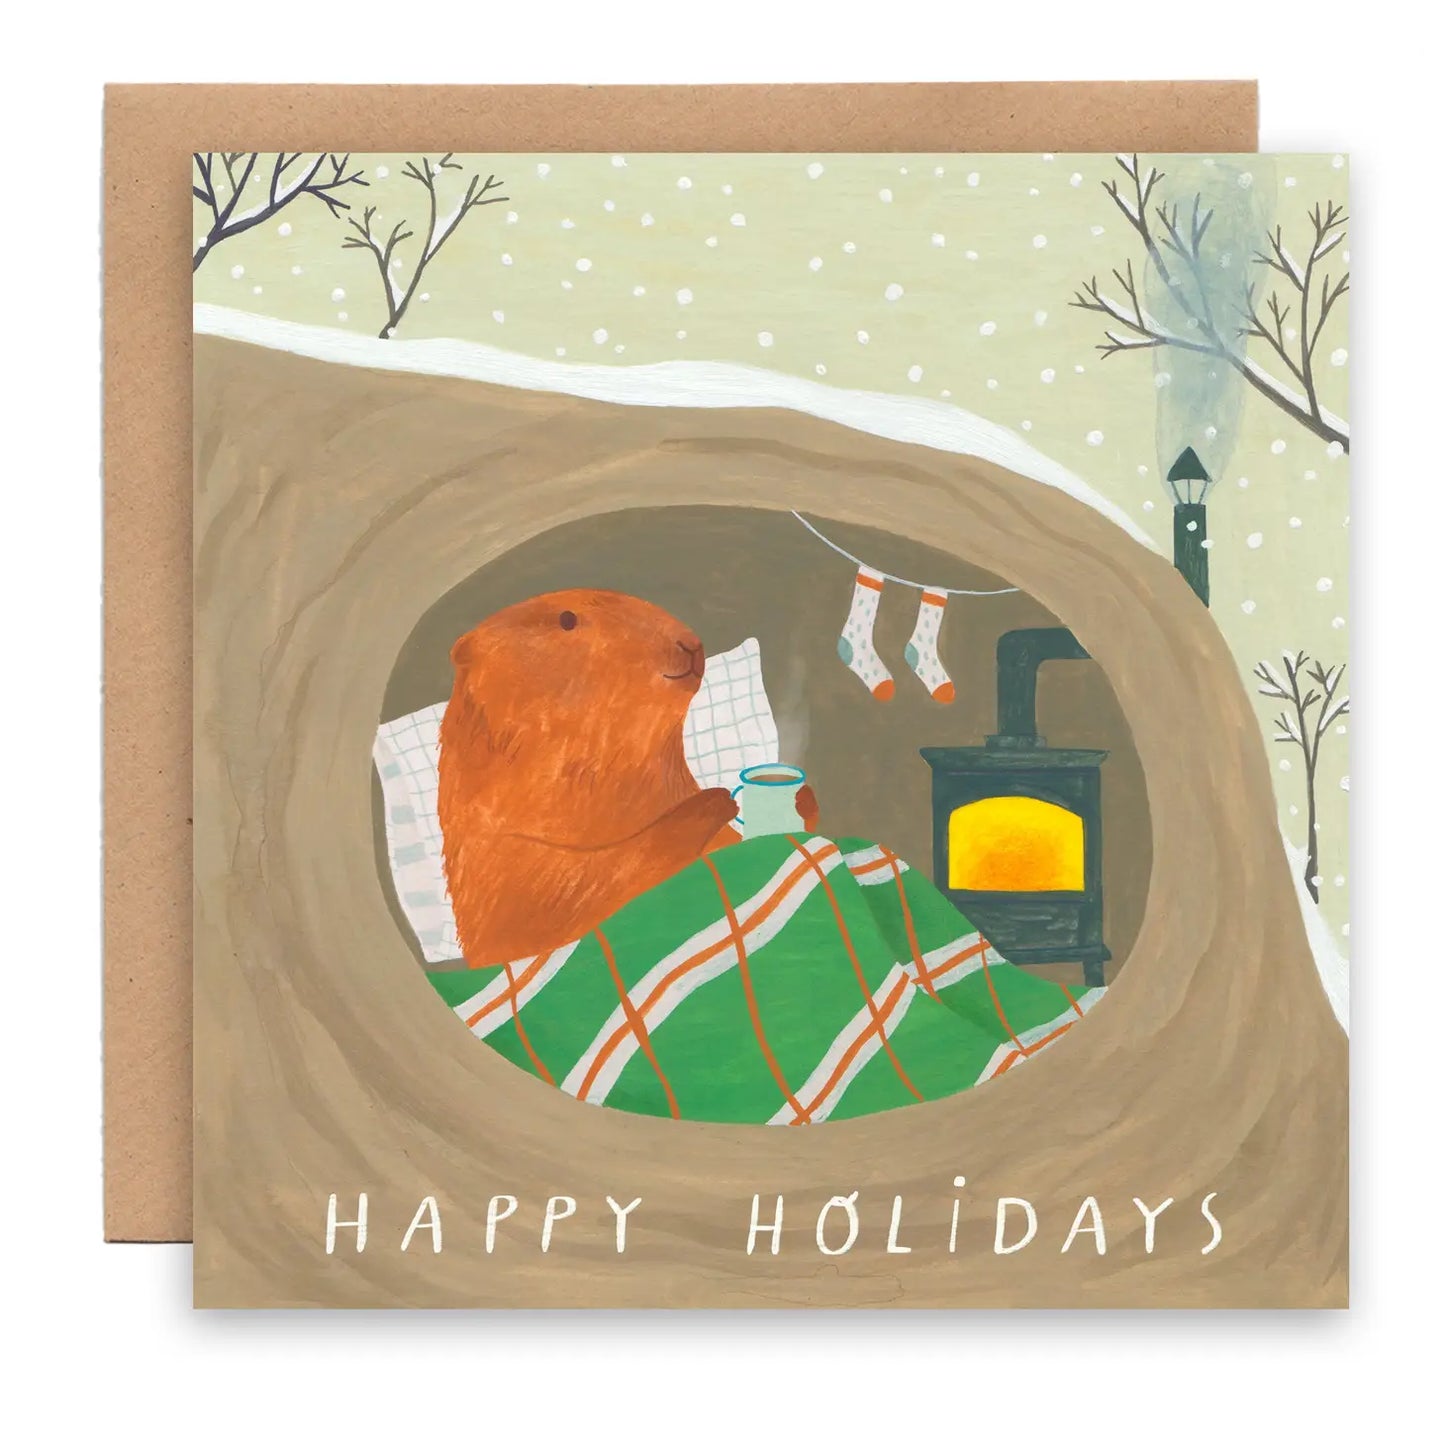 Happy Holidays - Christmas card